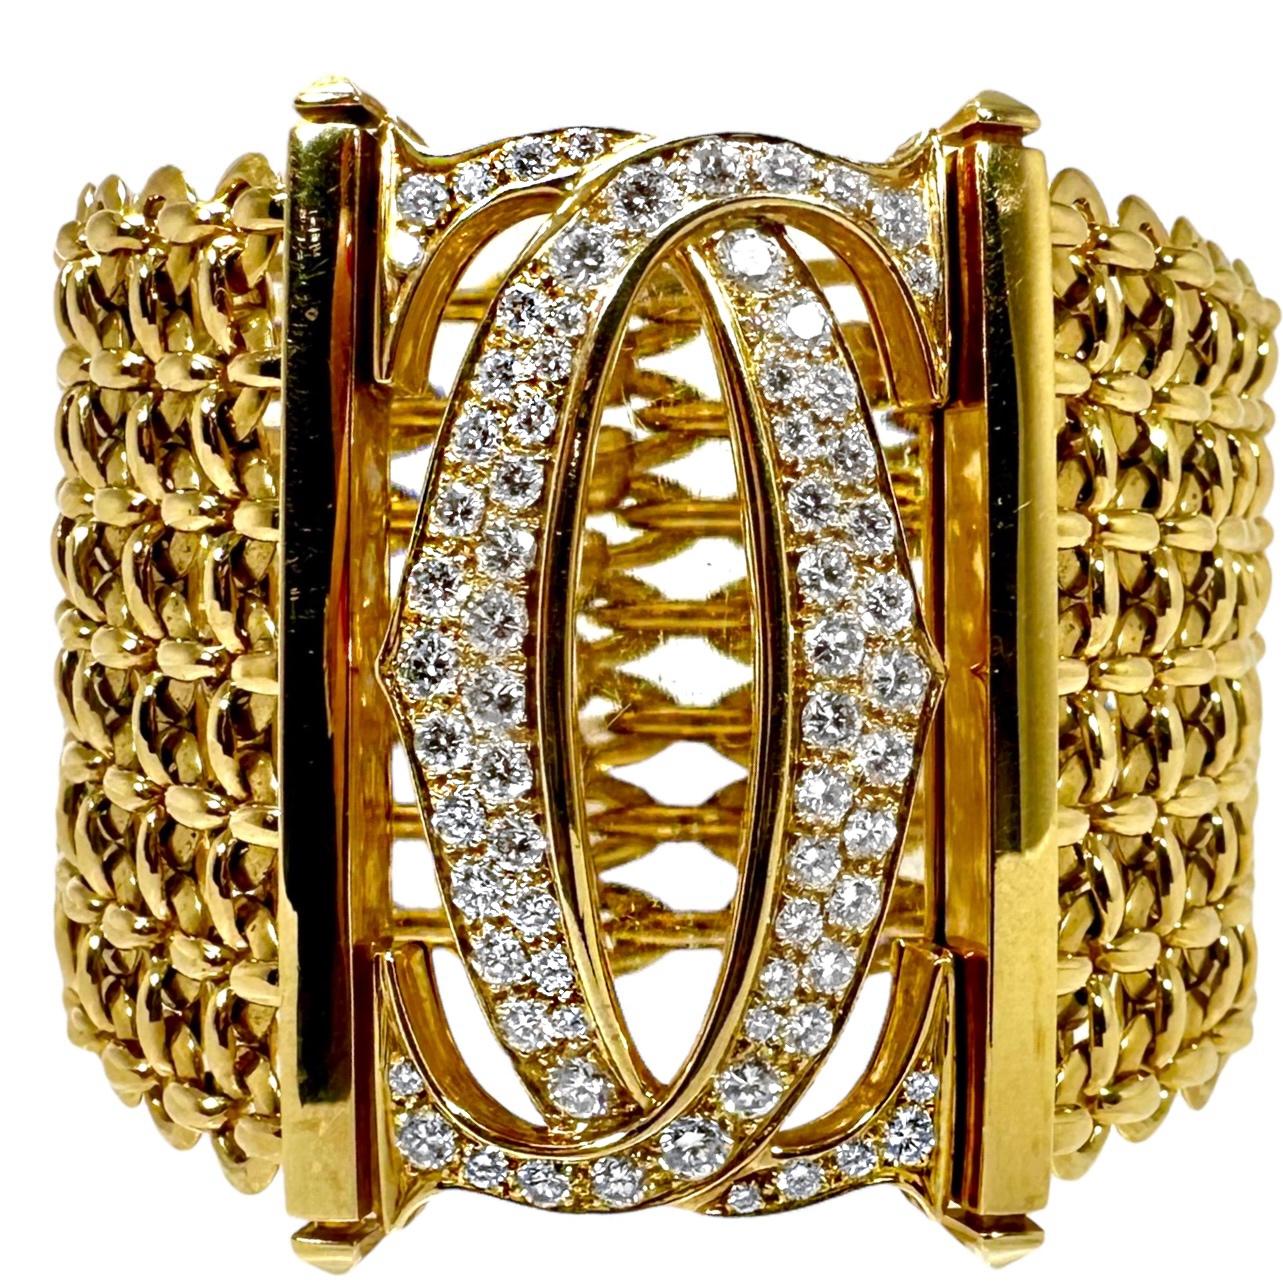 This very iconic European Cartier seven row Penelope bracelet with diamond crossed 